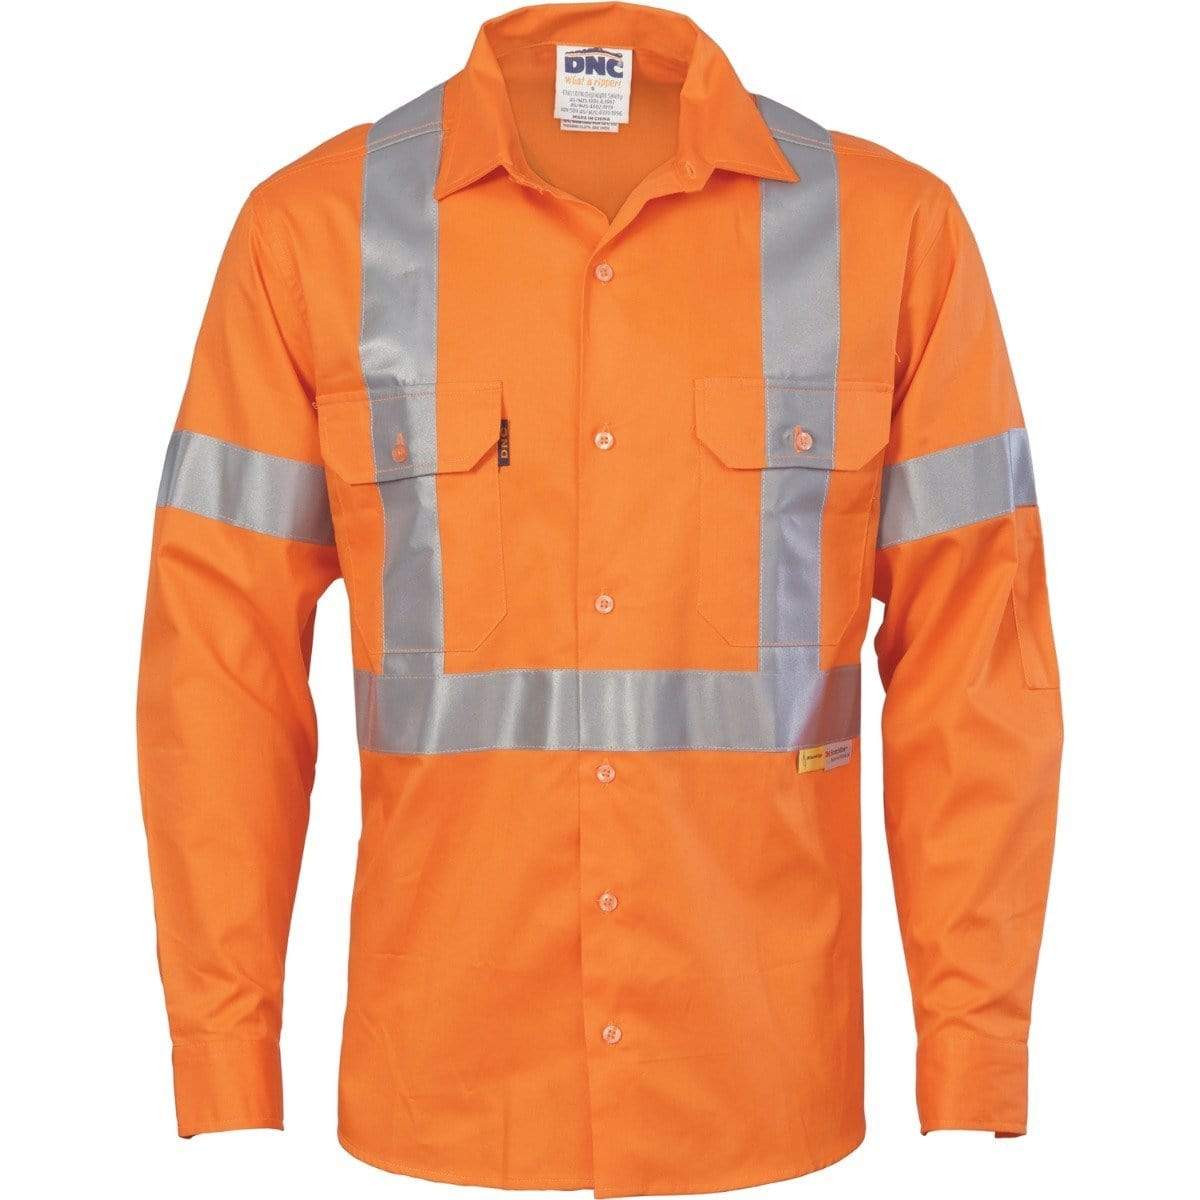 Dnc Workwear Hi-vis Cool-breeze Cross-back Long Sleeve Cotton Shirt With 3m Reflective Tape - 3946 Work Wear DNC Workwear Orange S 